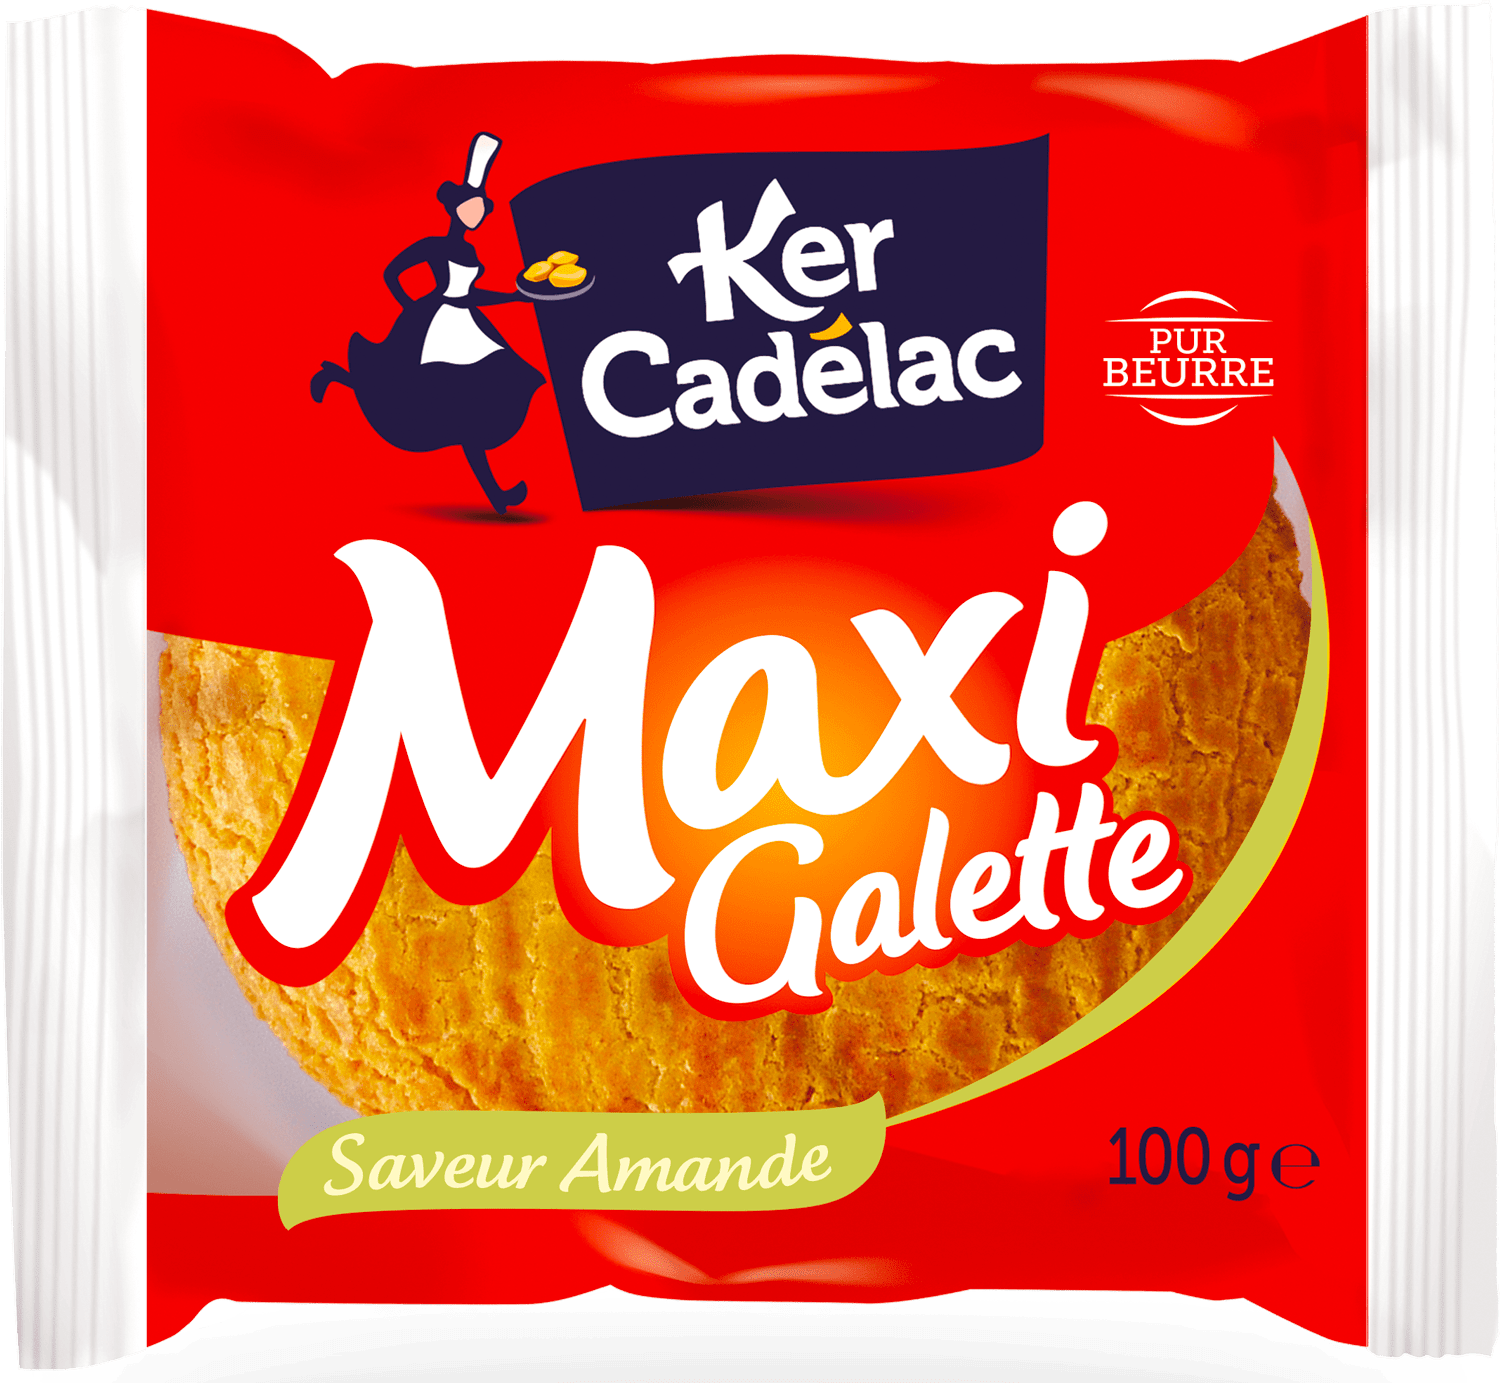 Maxi galette | Ker Cadélac